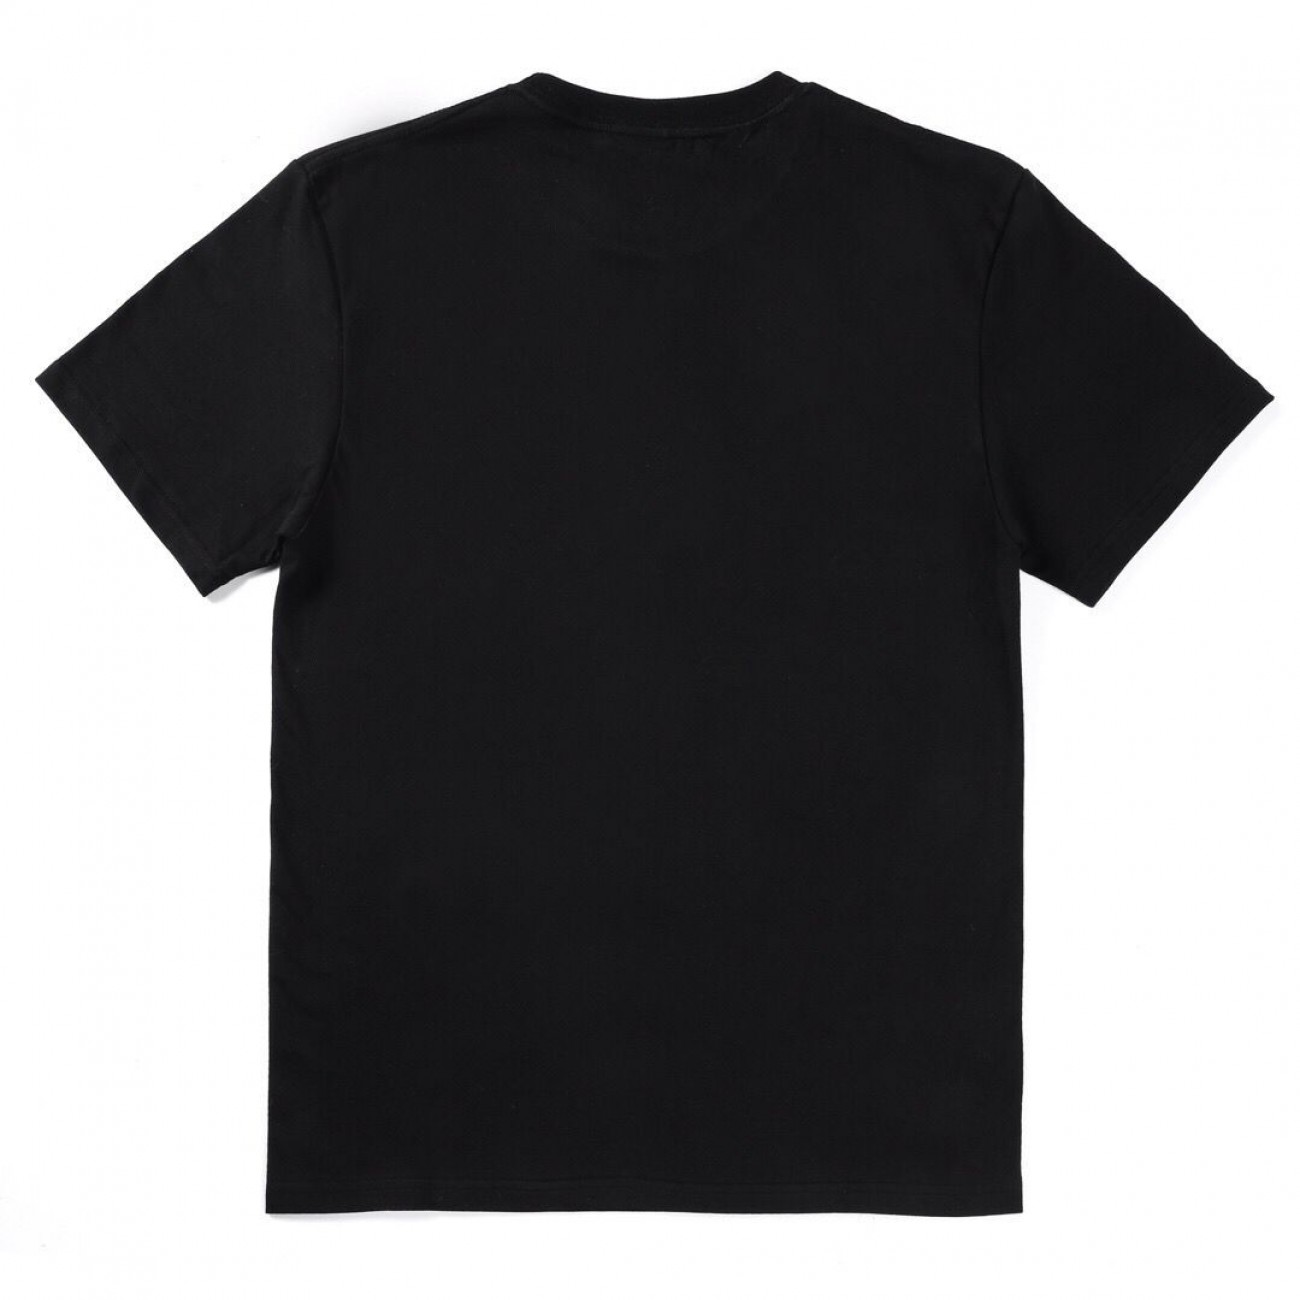 Supreme Tentacles Tee T-shirts Black/White